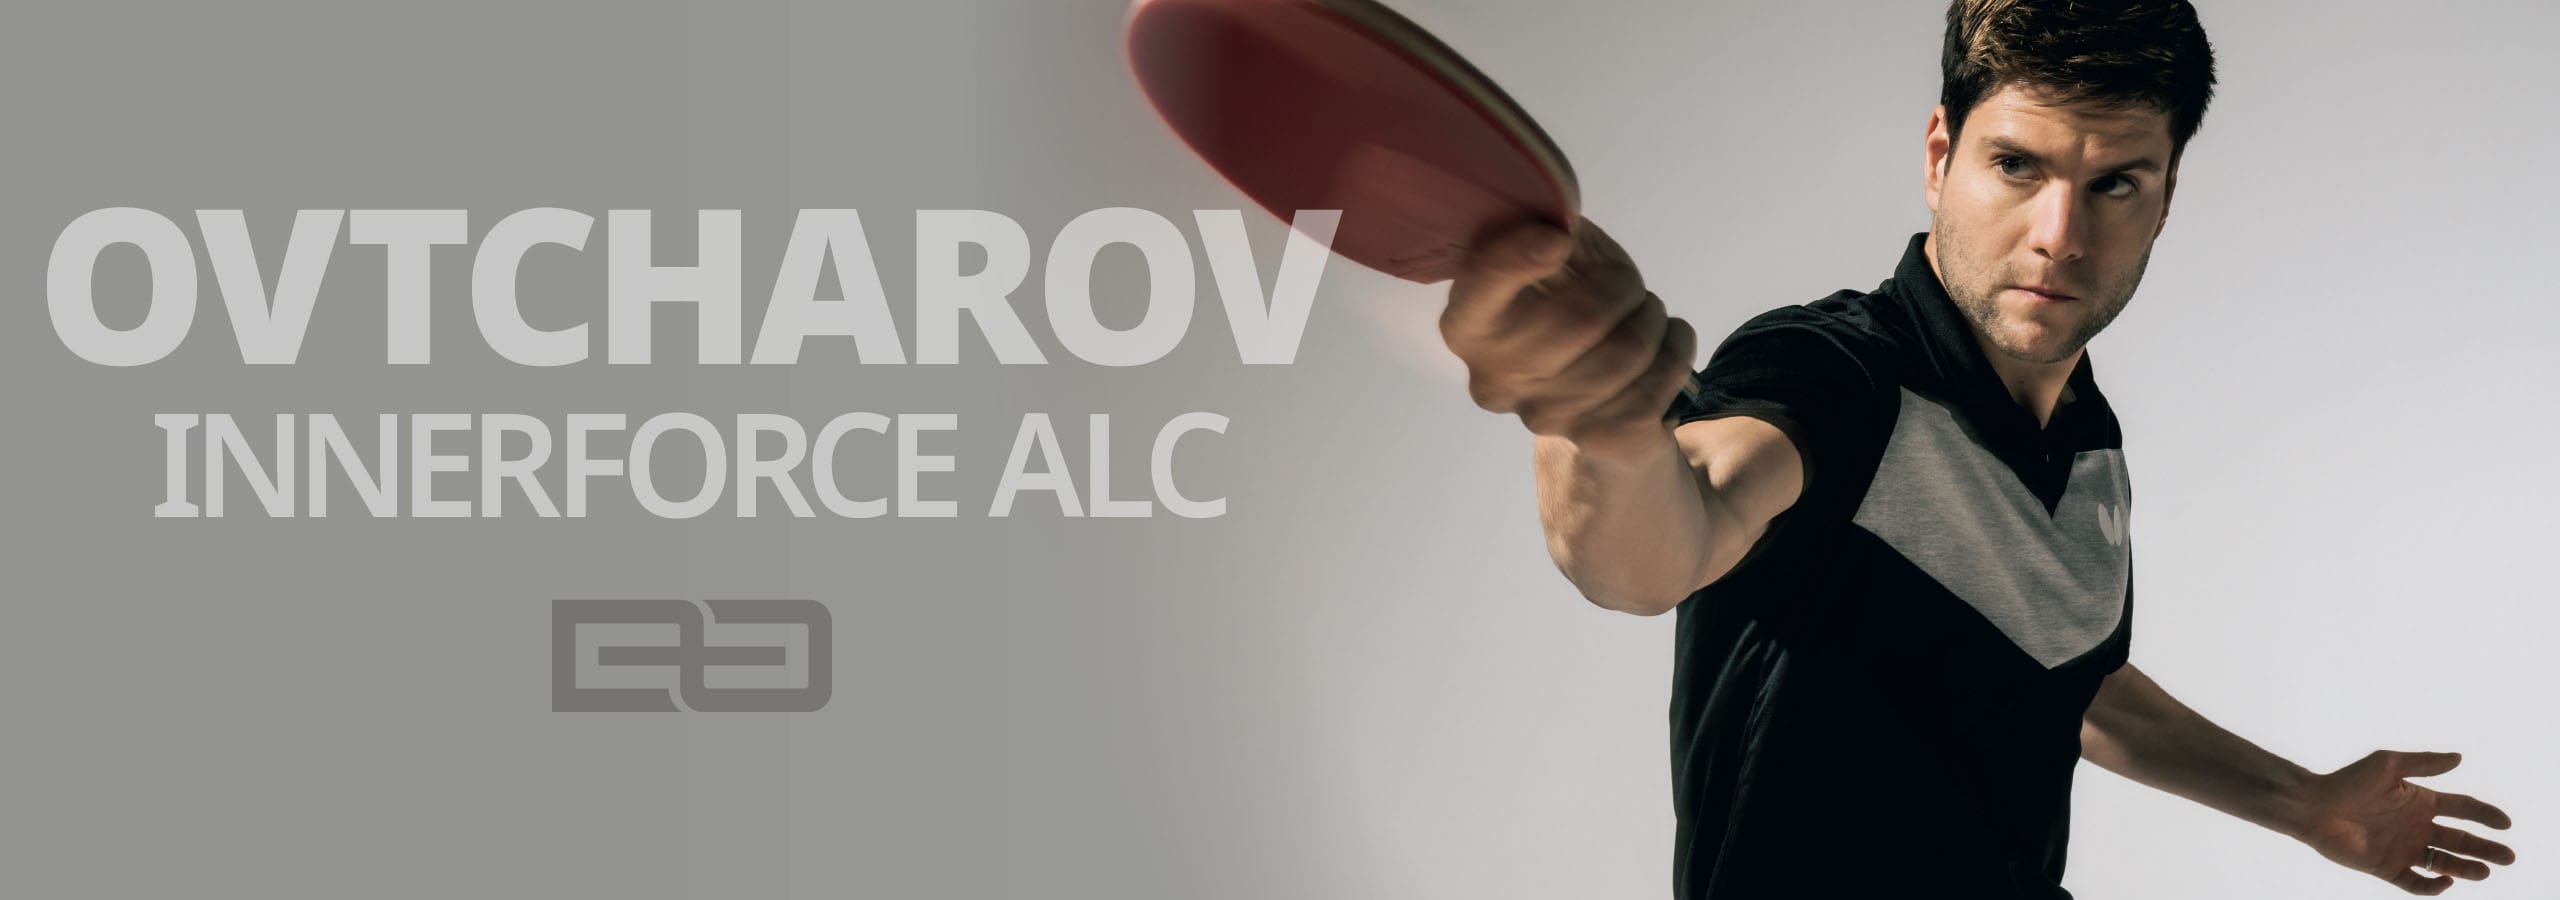 Основание Ovtcharov Innerforce ALC краткий обзор новинки